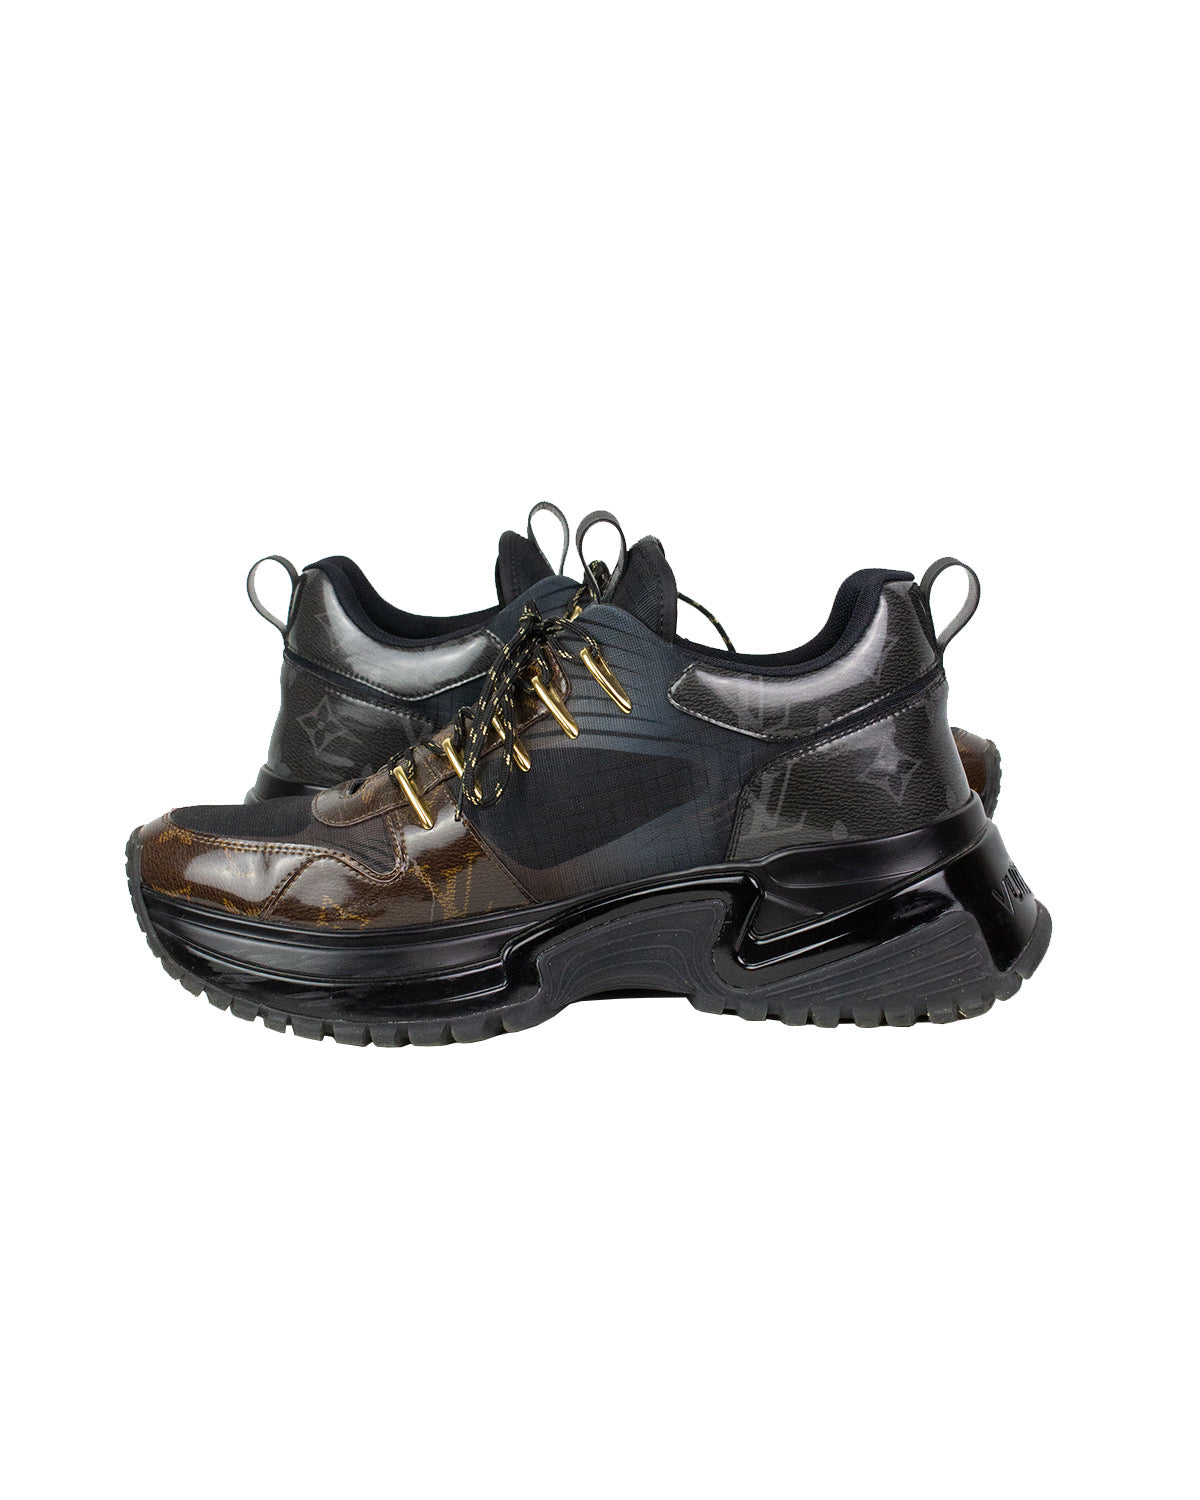 Louis Vuitton Python Leather Rare Run Away Pulse Line Sneaker Size 7